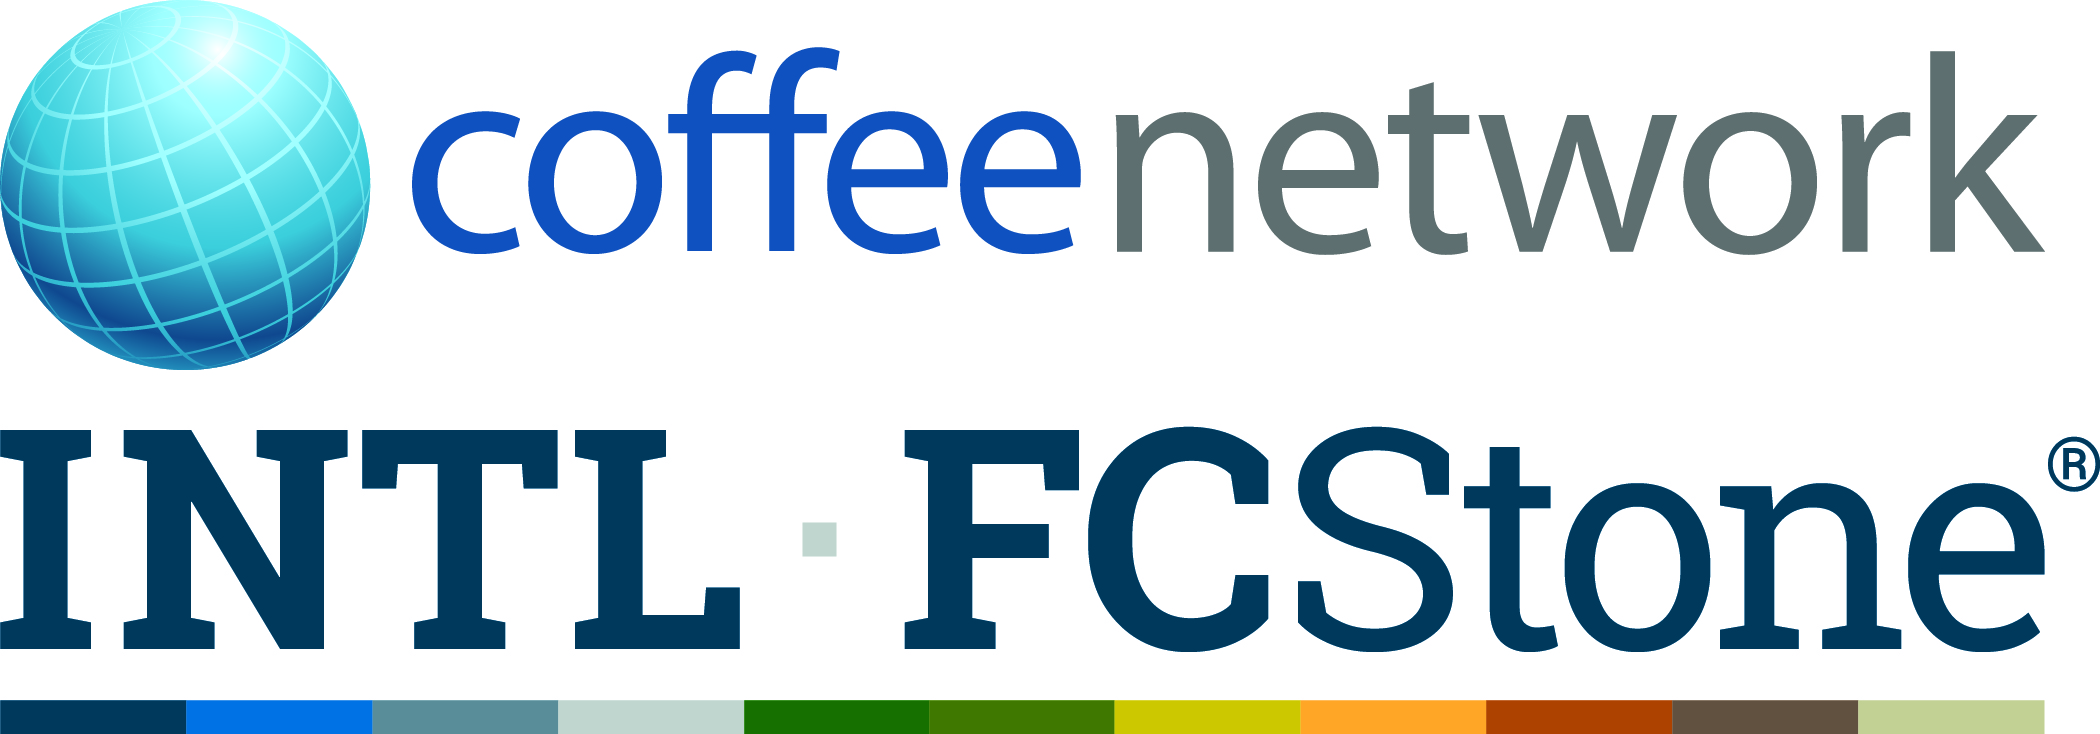 intl-coffee-network-logo-020416-1225